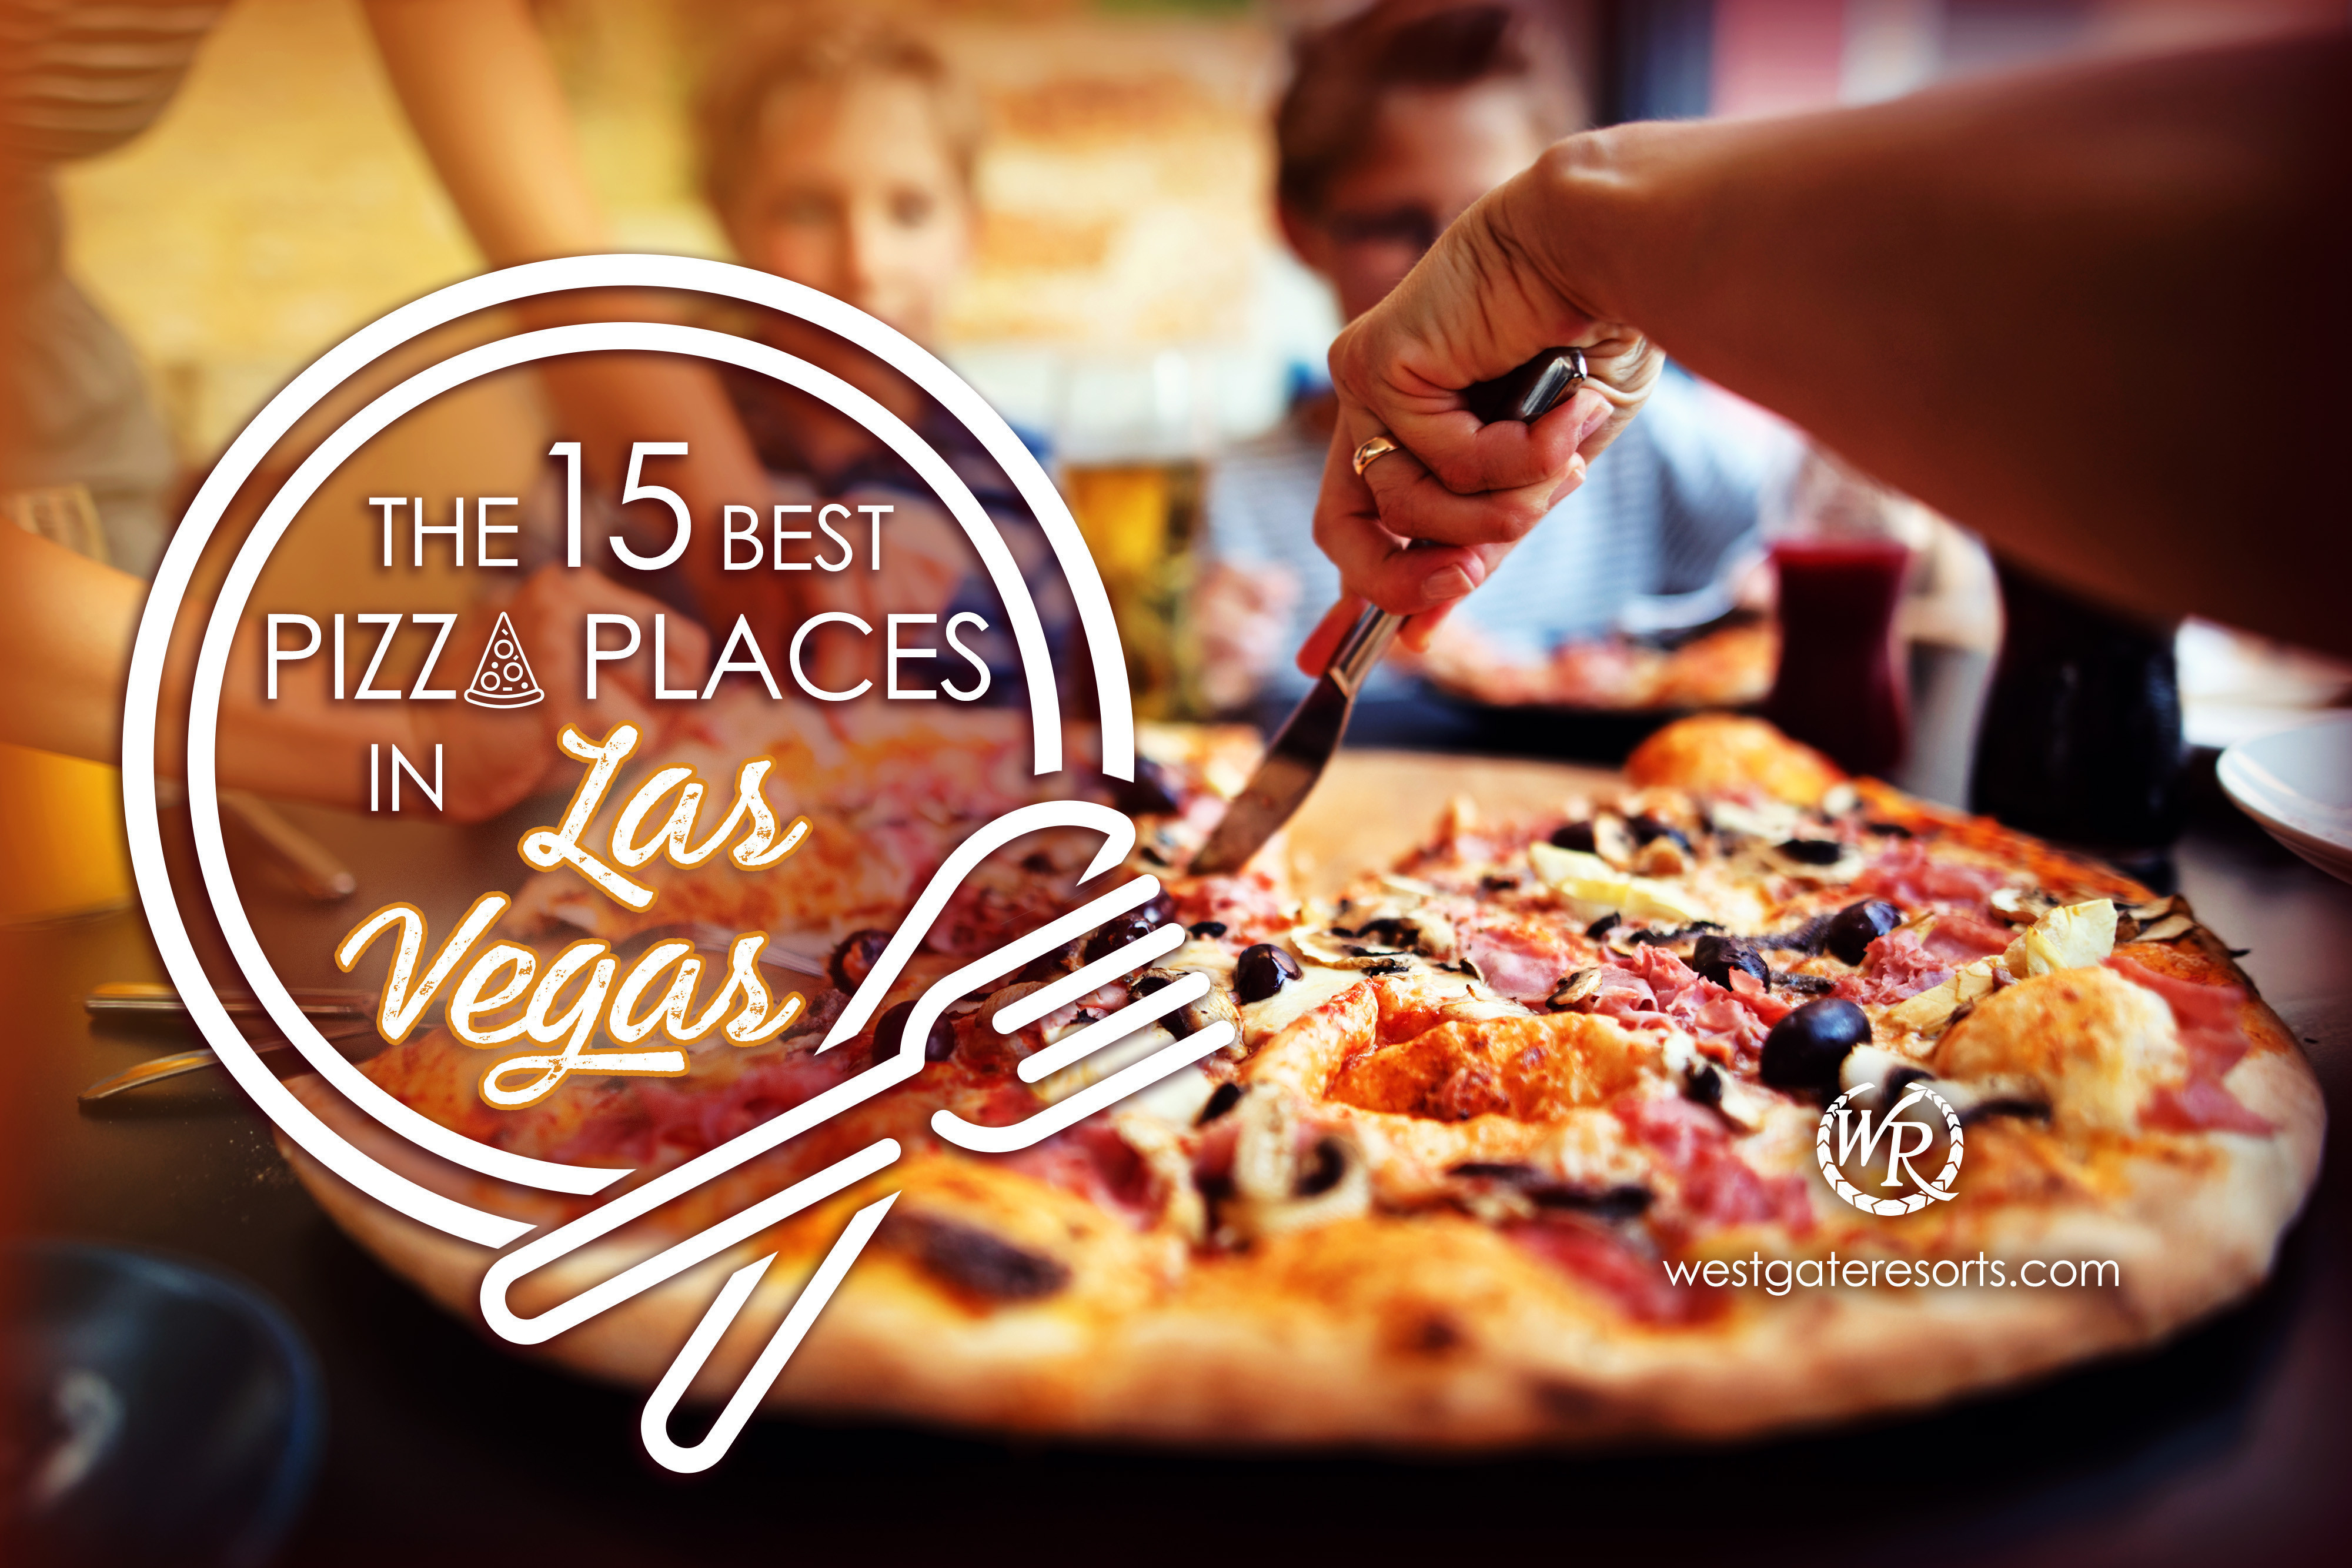 The 15 Best Pizza Places in Las Vegas